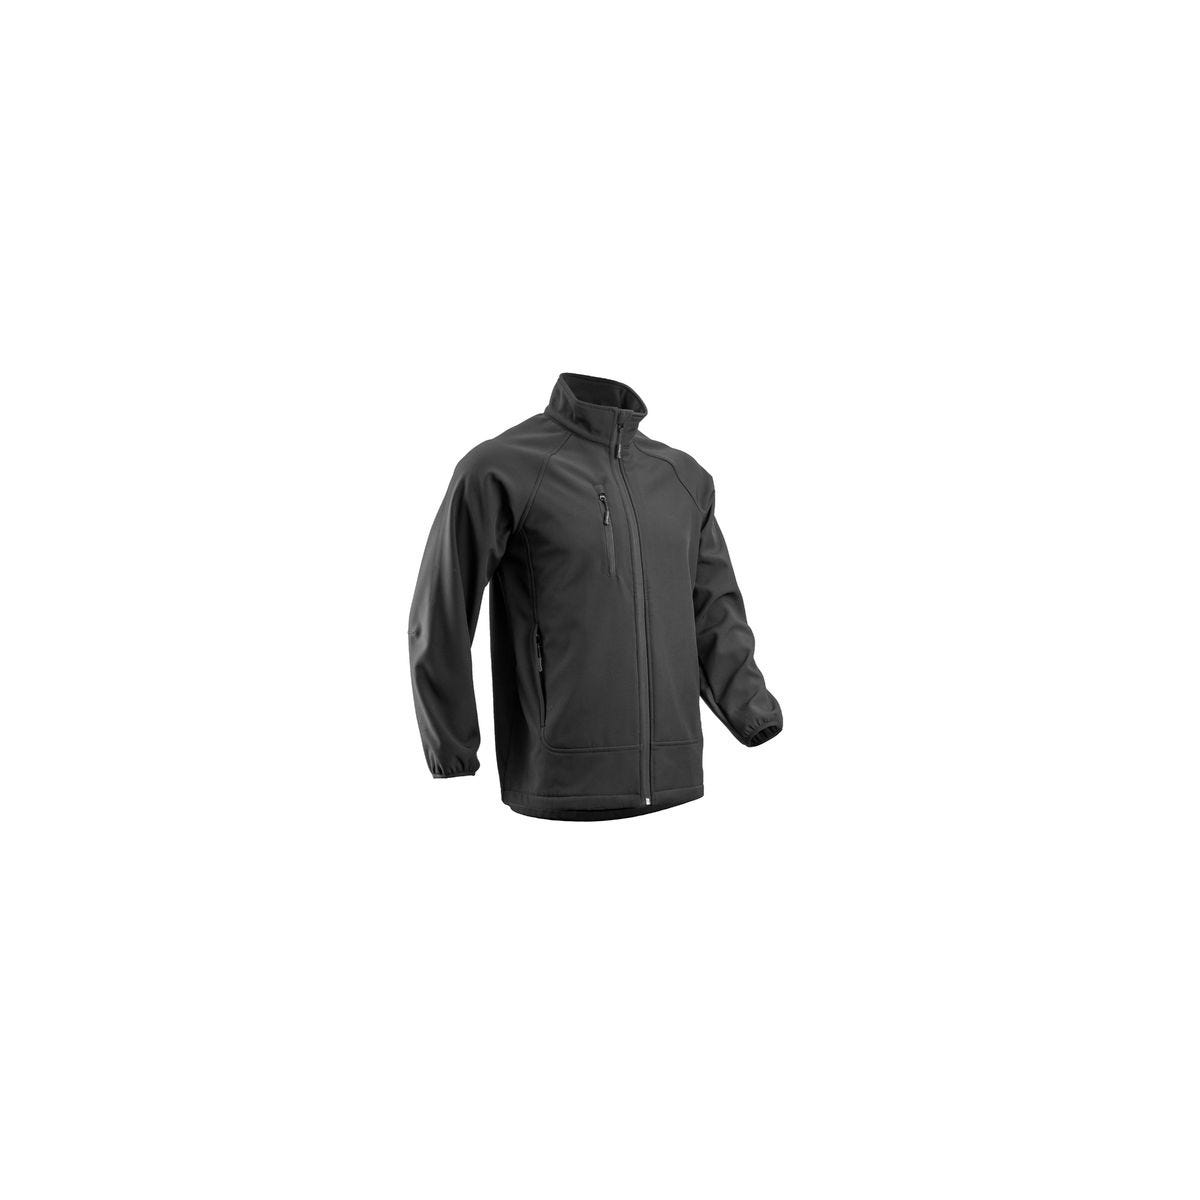 SOBA Veste Softshell noire, homme, 290g/m² - COVERGUARD - Taille M 0